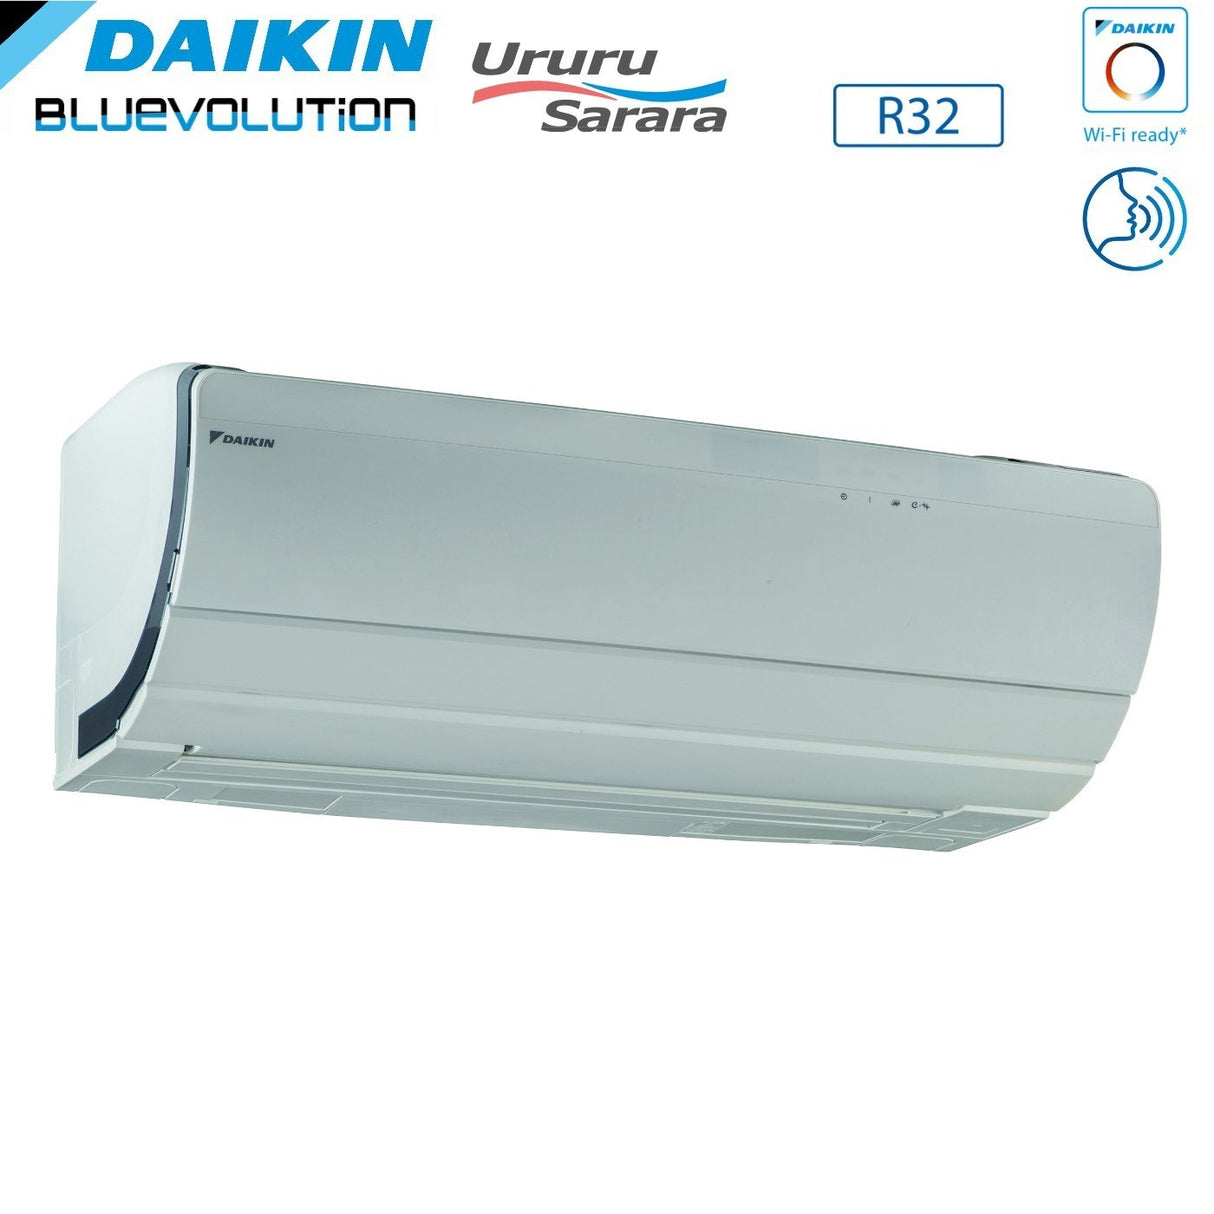 immagine-3-daikin-climatizzatore-condizionatore-daikin-bluevolution-inverter-serie-ururu-sarara-18000-btu-ftxz50n-r-32-wi-fi-optional-classe-a-garanzia-italiana-ean-8059657005717